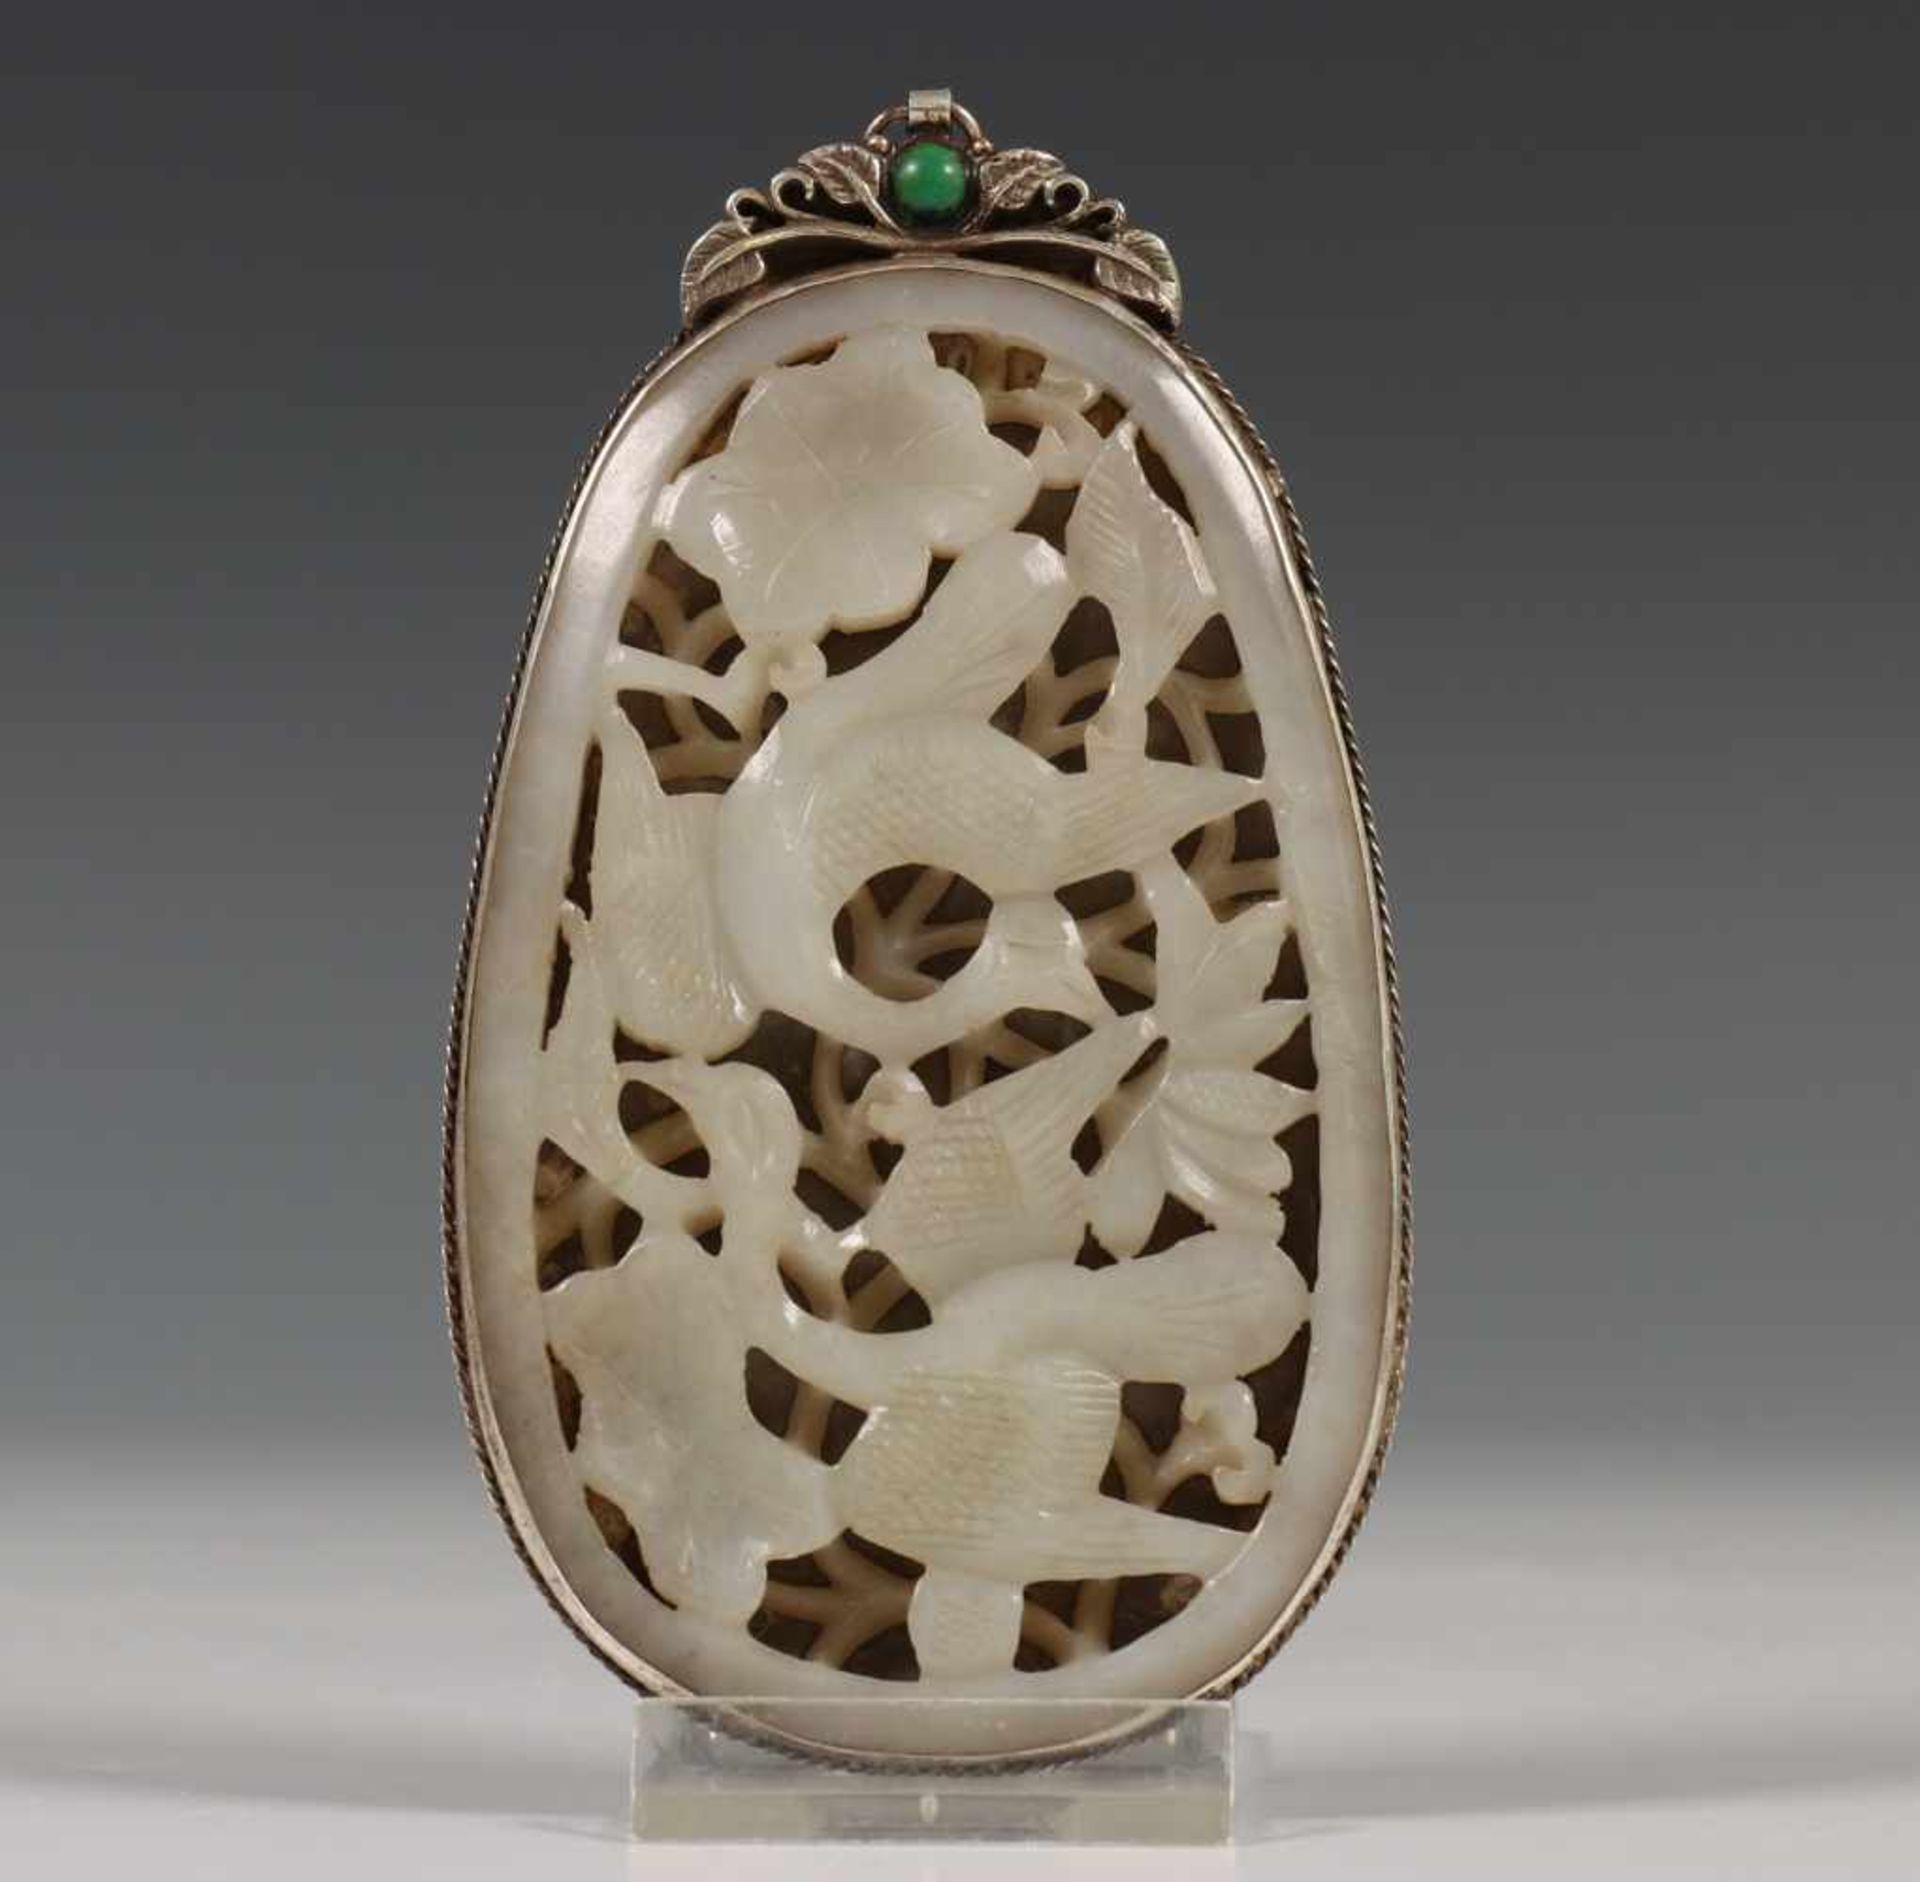 China, wit jadeit ajour pendantin zilveren montering, gekeurd, 12 x 6,5 cm. [1]300